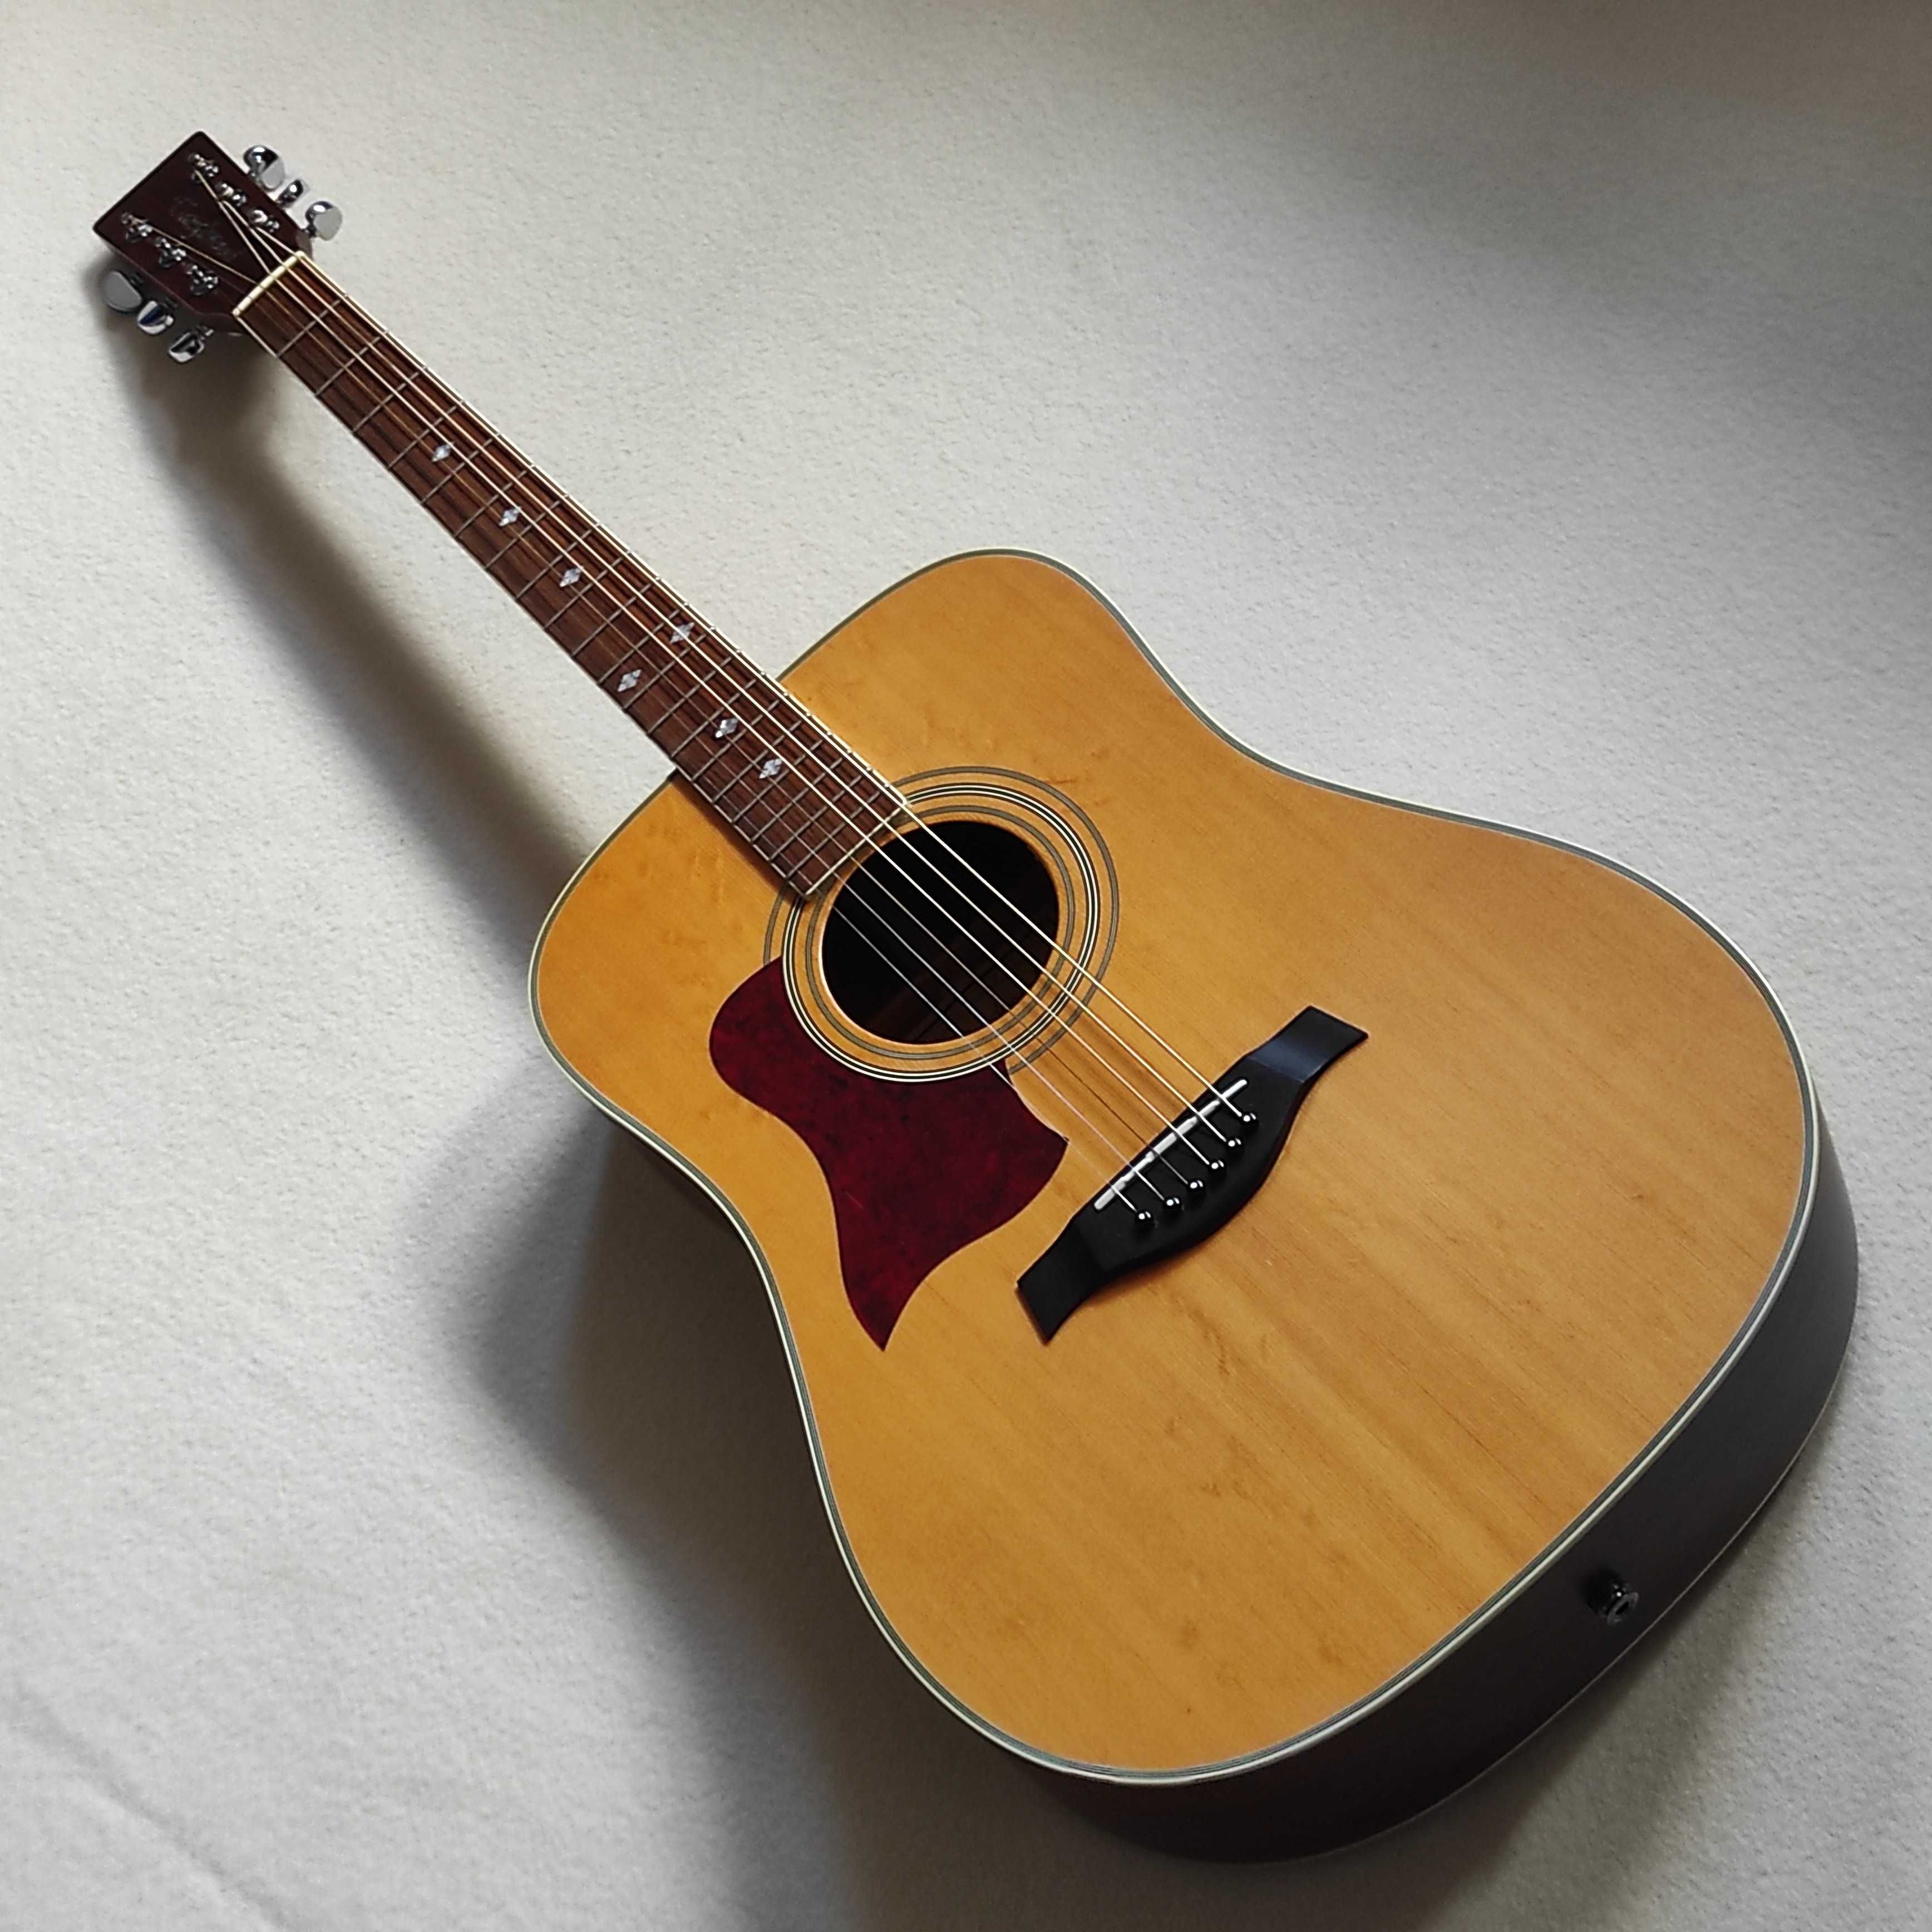 Gitara leworęczna Tanglewood TW15N-NS-LH - kopia gitary Martin D-18